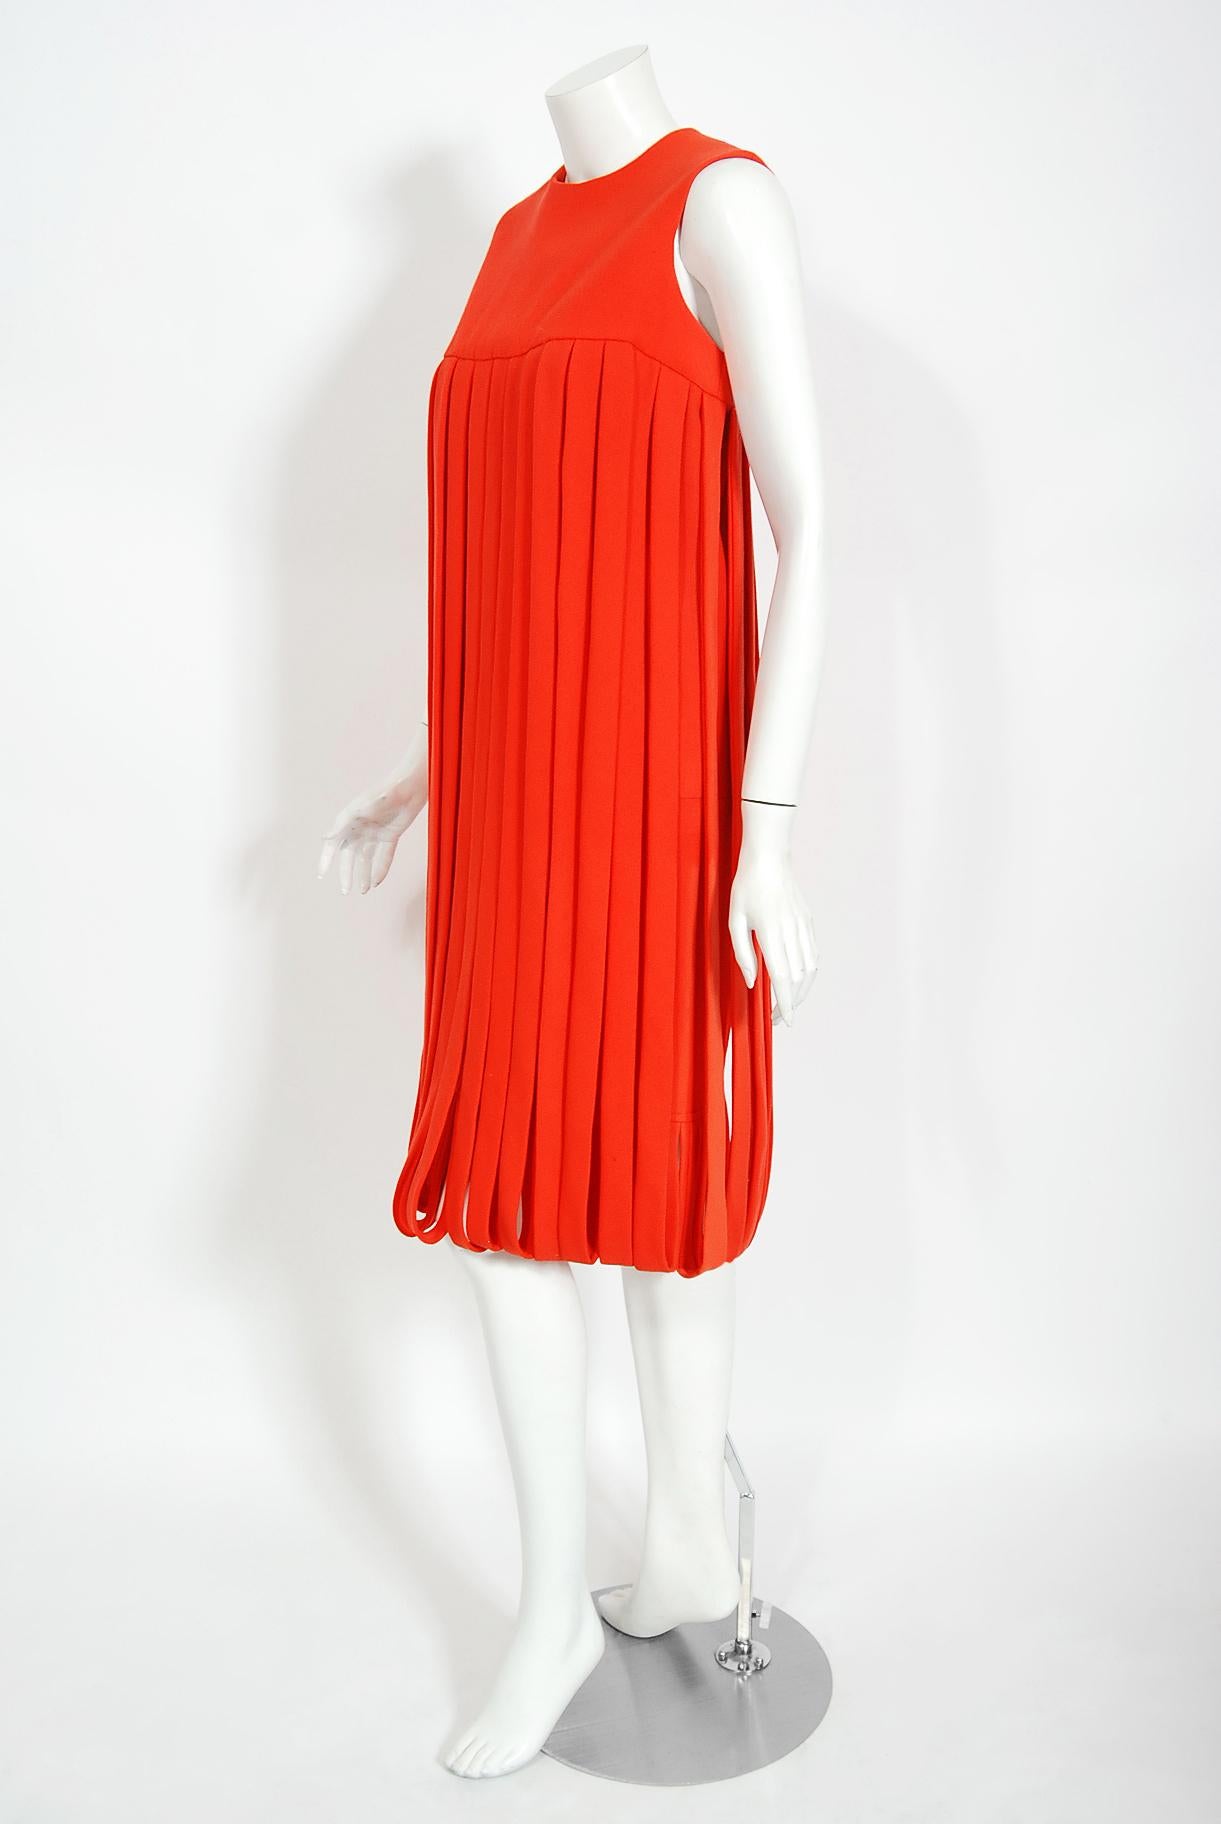 Red Vintage 1967 Pierre Cardin Documented Orange Wool Space-Age Mod Carwash Dress